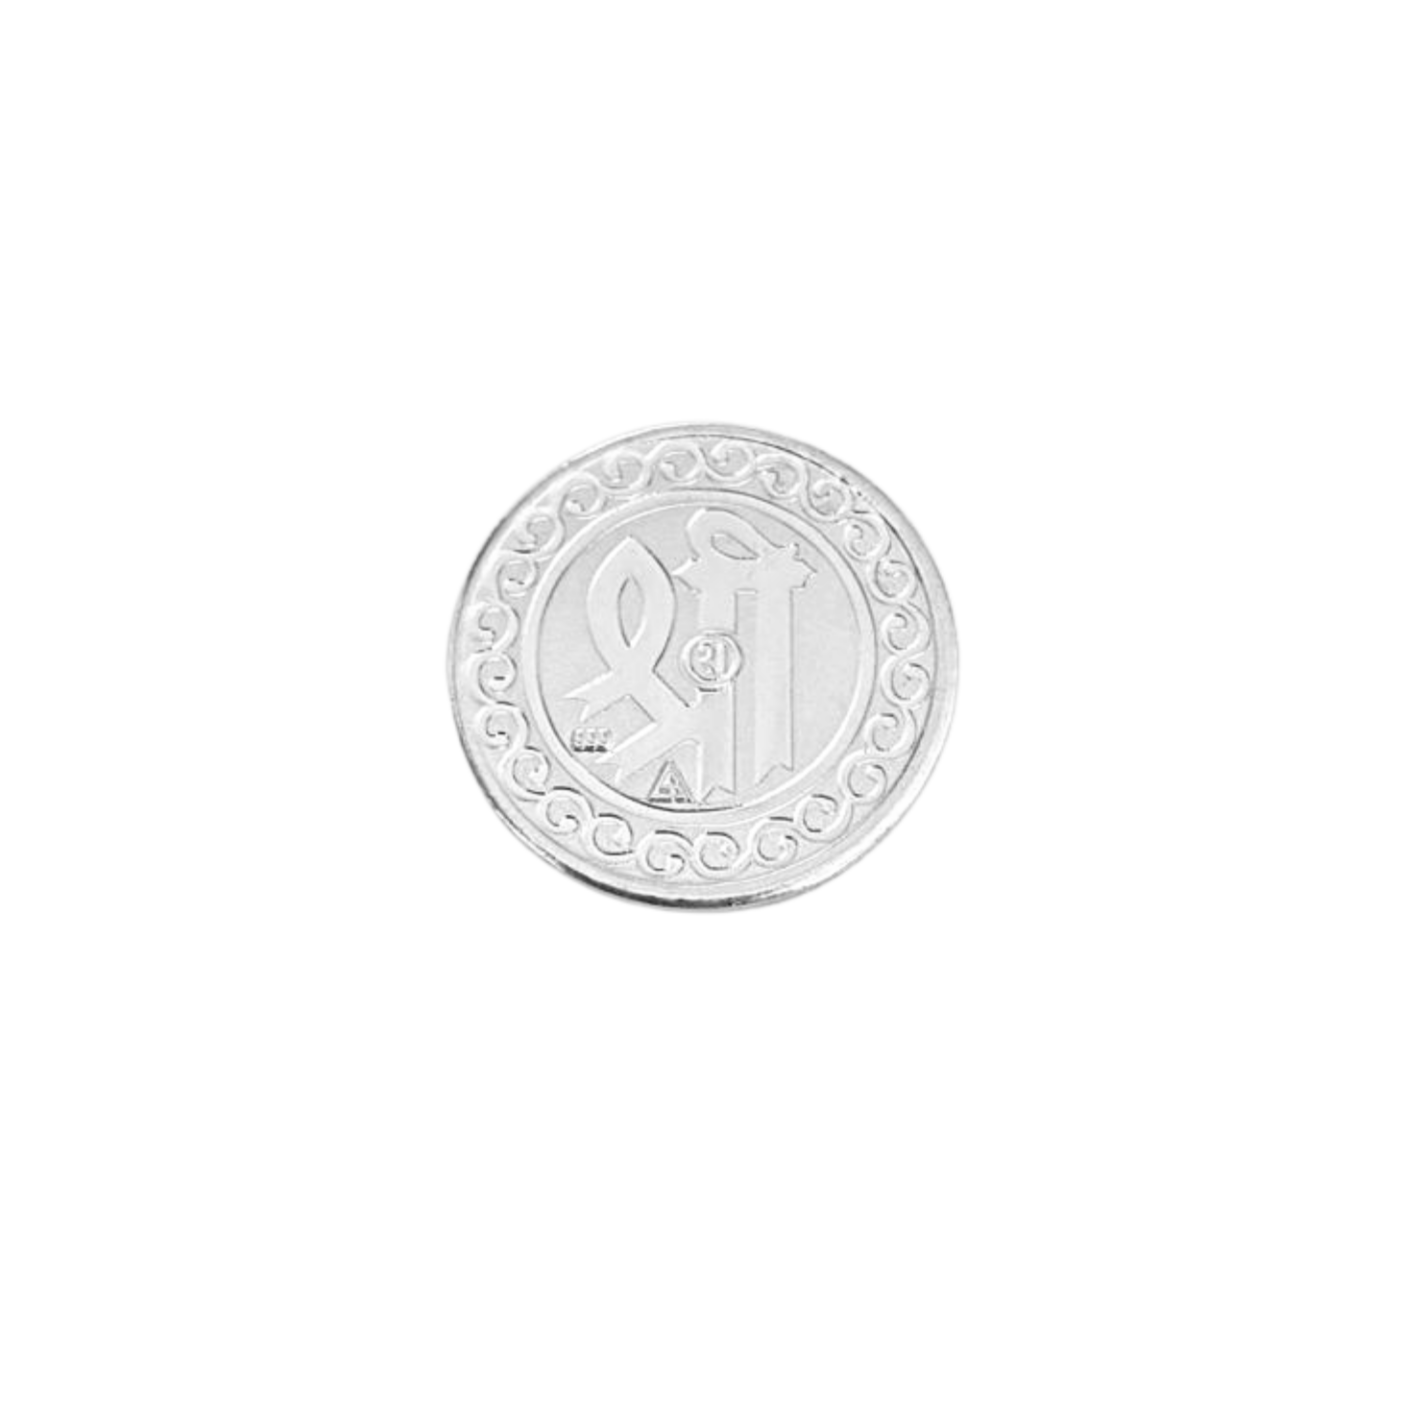 Pure 999 BIS Hallmarked 5gram- Lord Ganesha and Laxmi Silver Coin